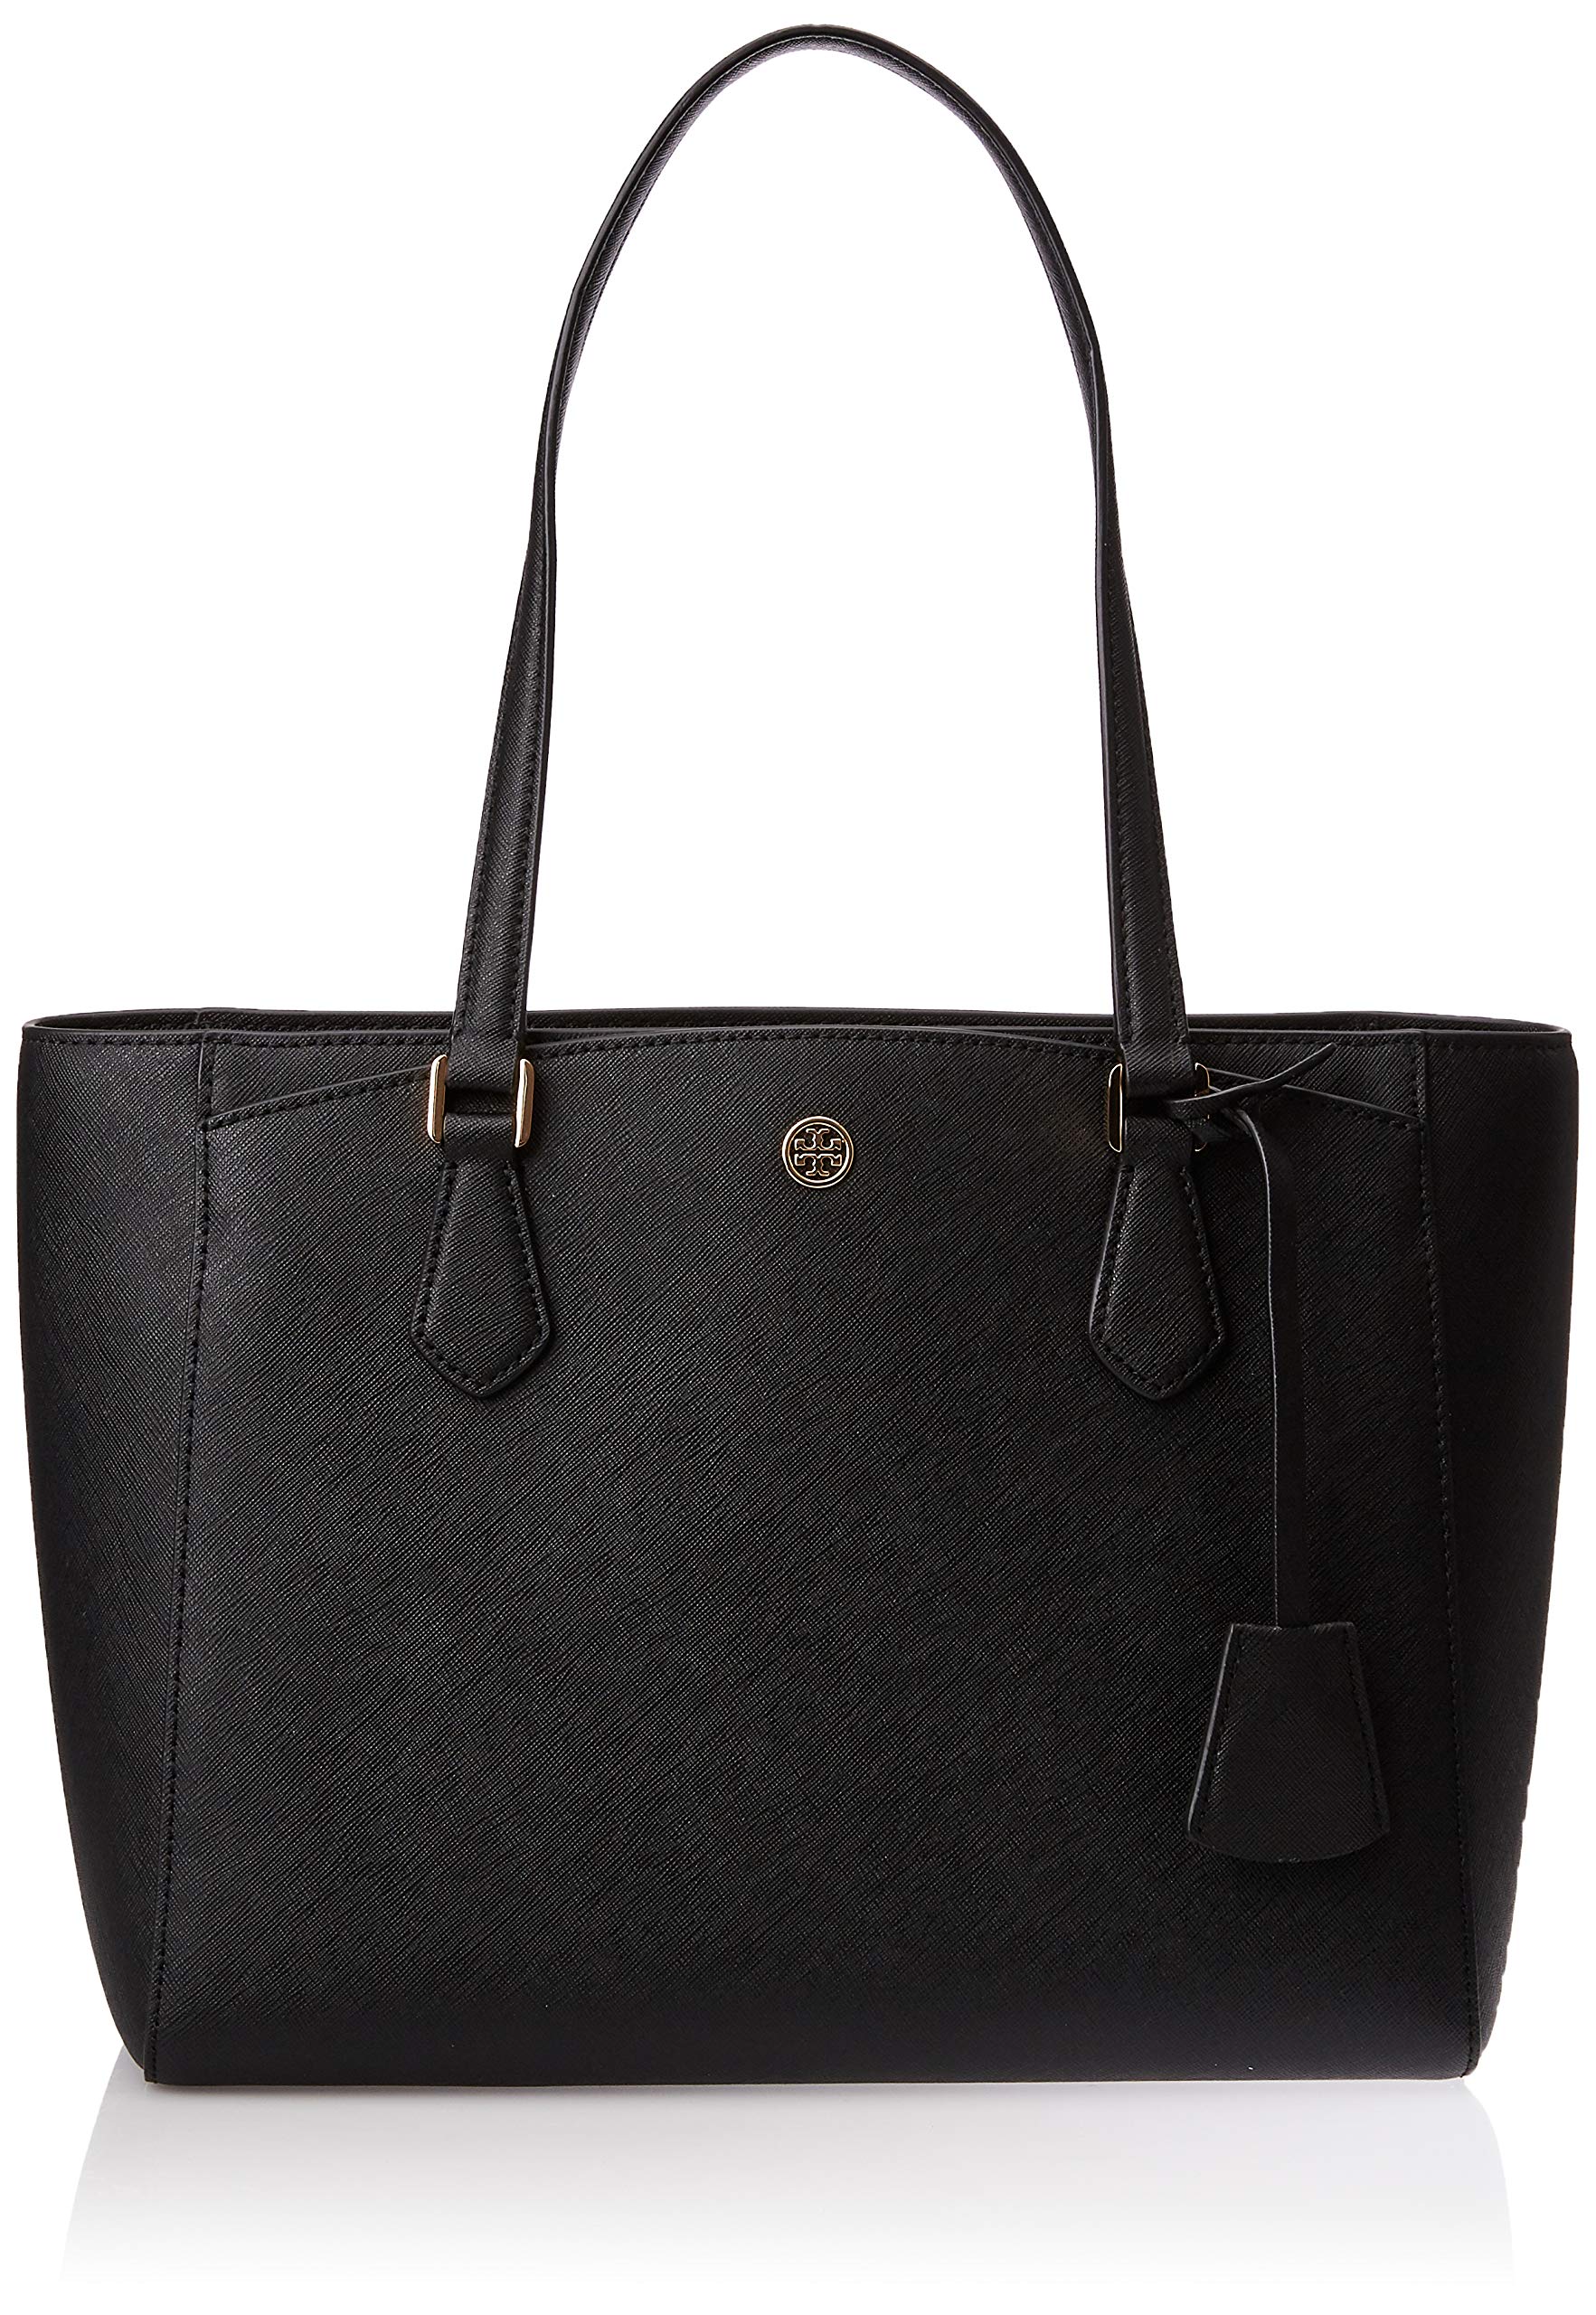 Tory Burch Womens Robinson Leather Satchel Tote Handbag Black Medium